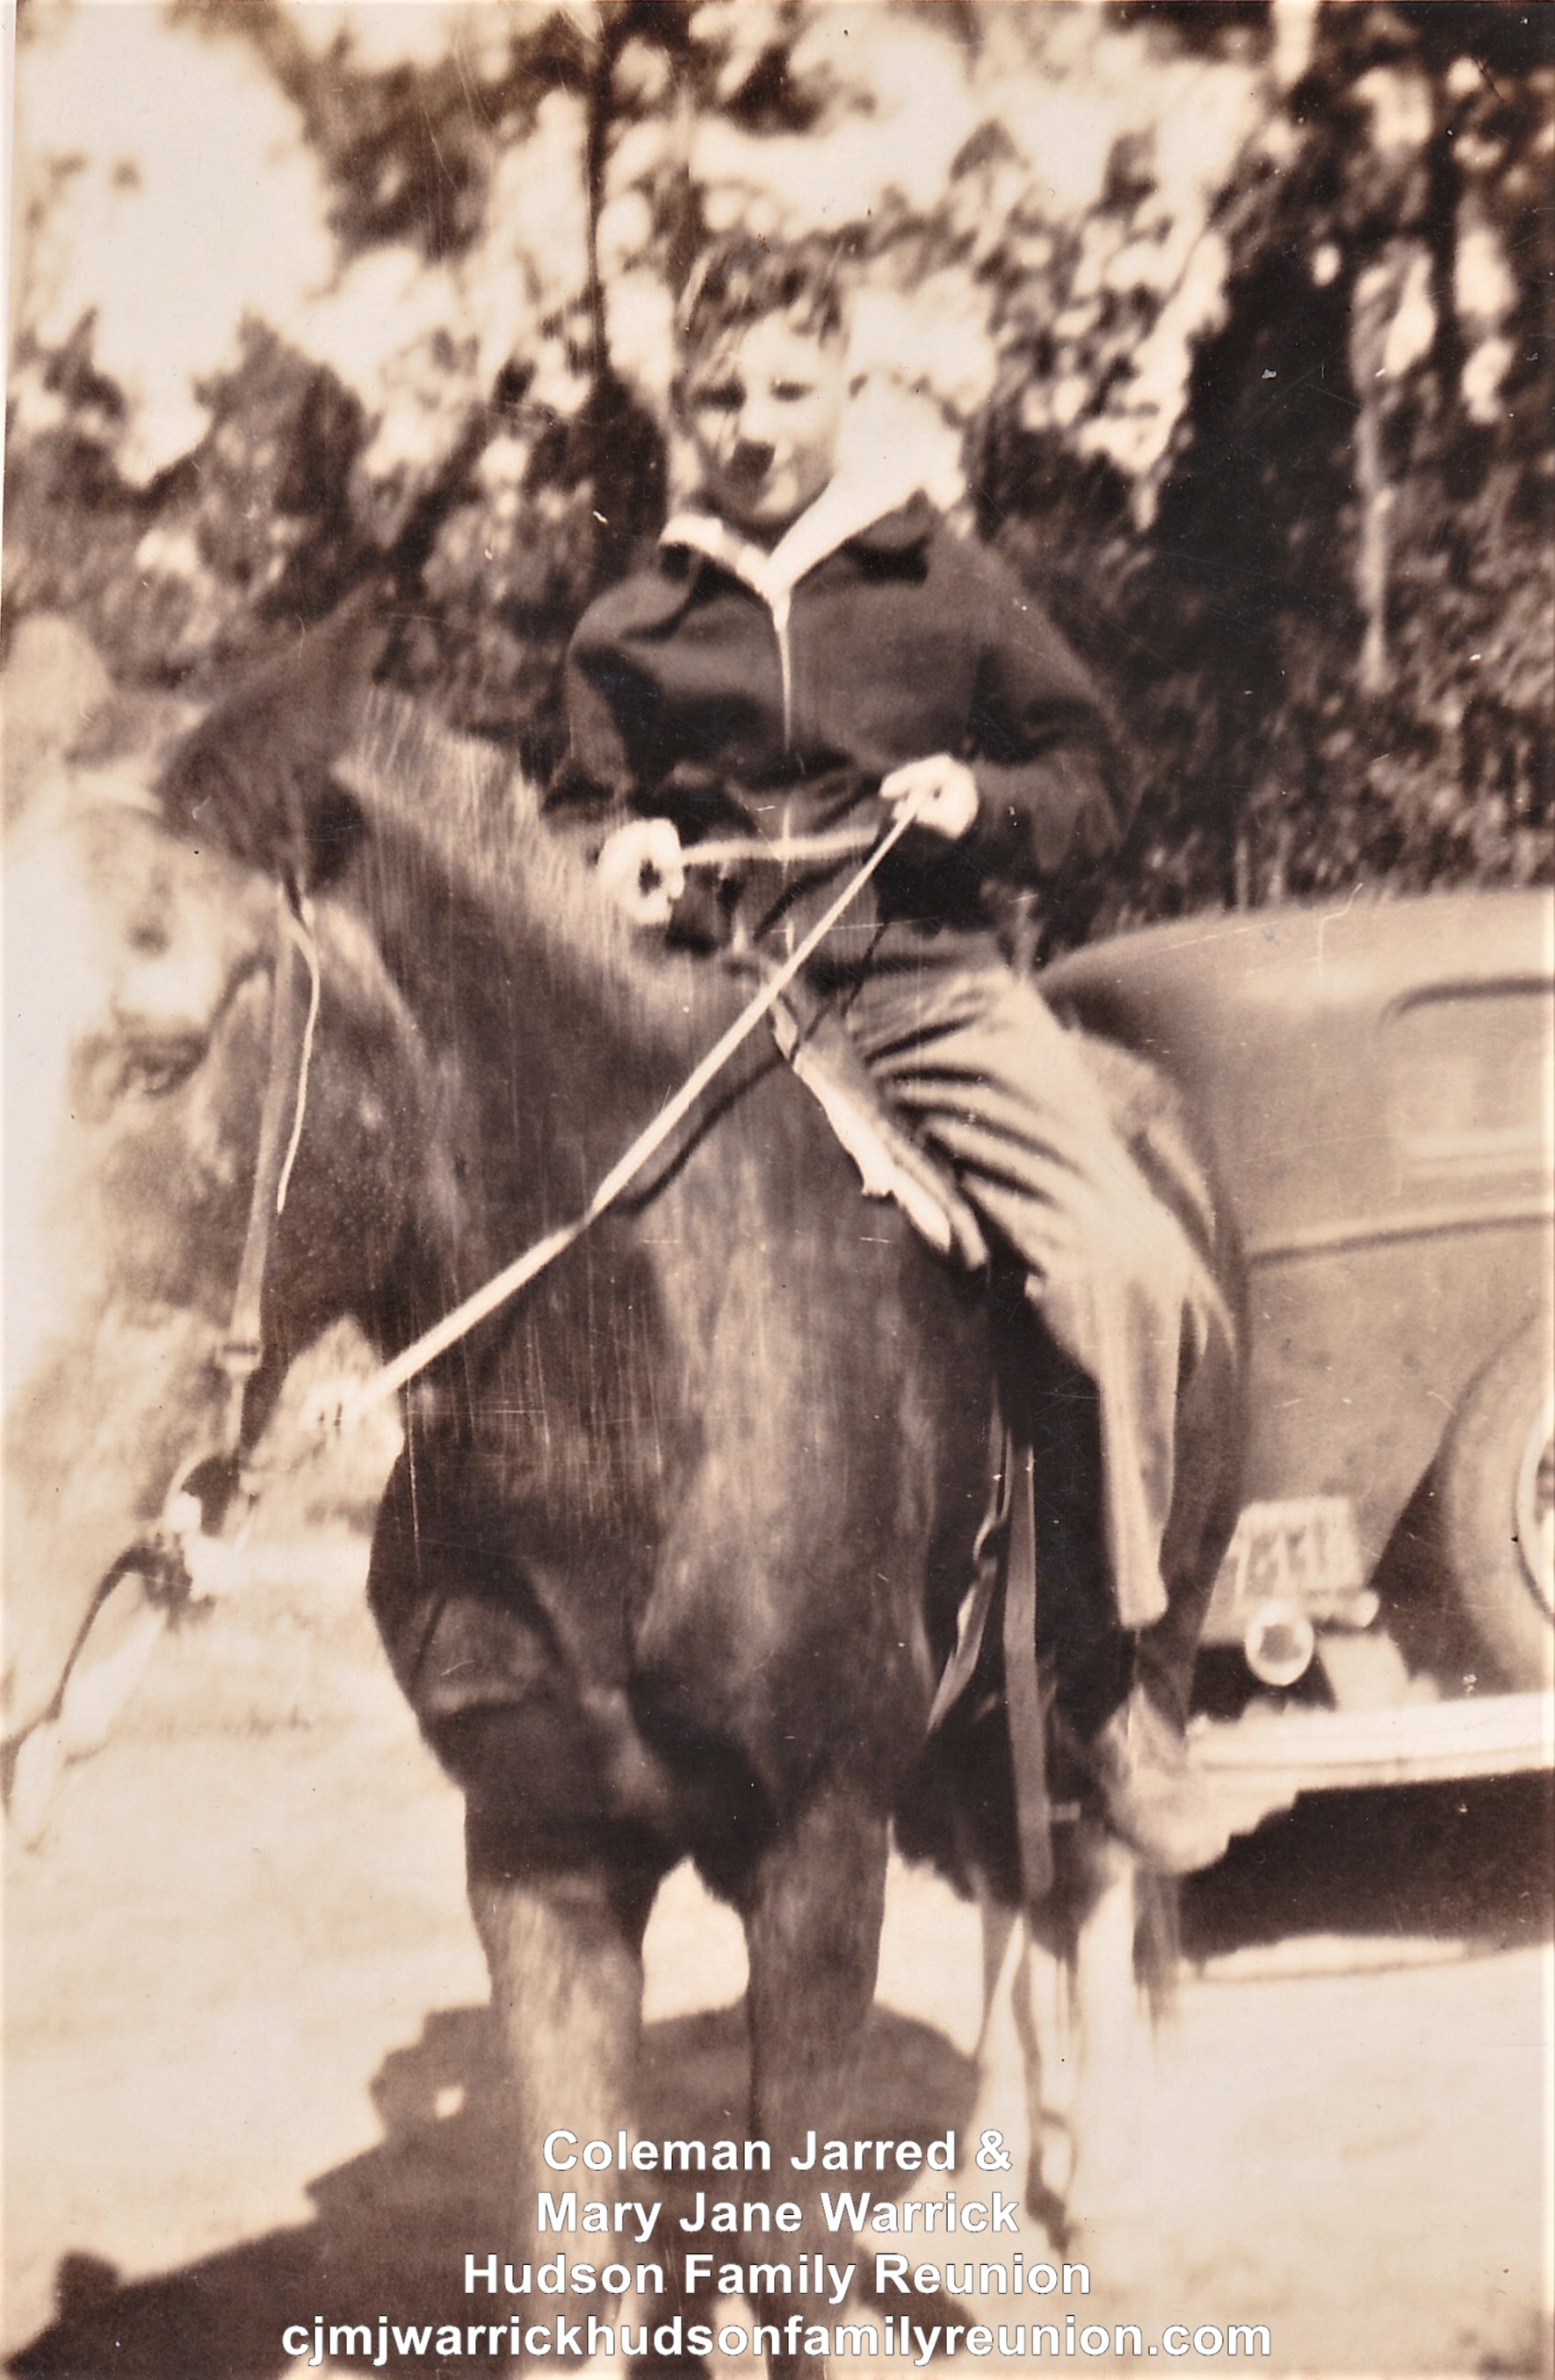 David Hudson on his horse.
